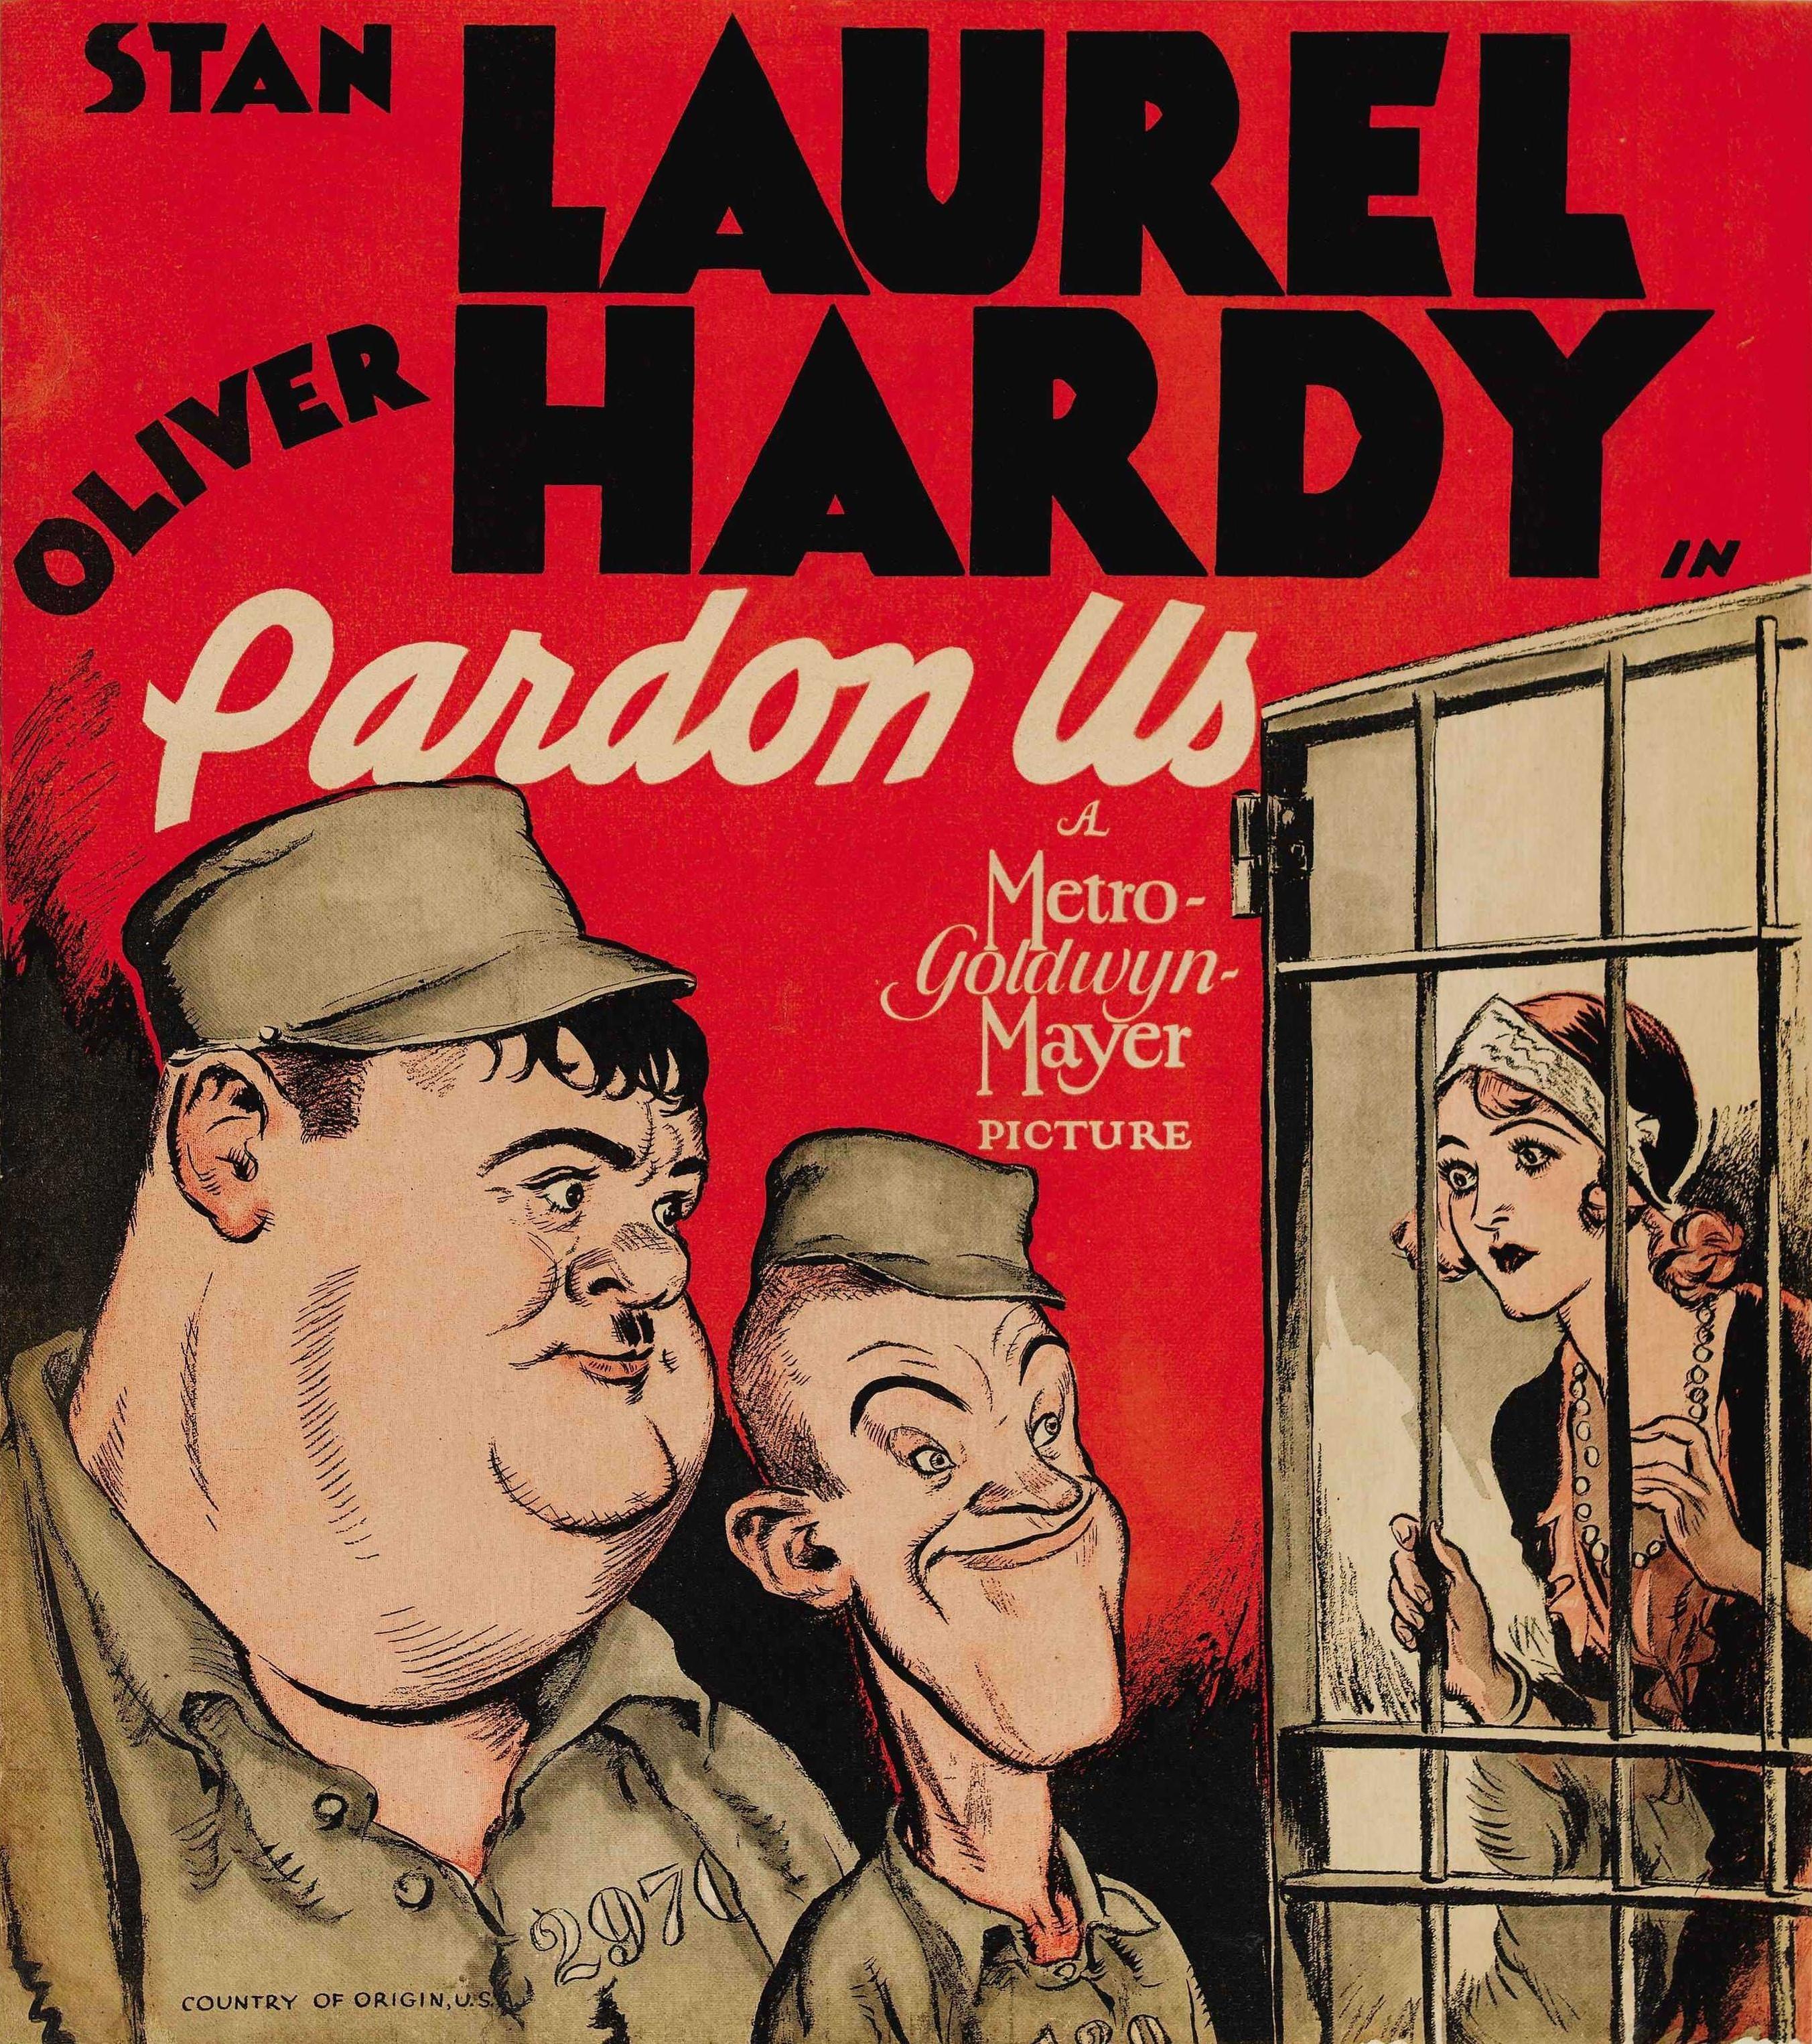 Миль пардон мадам краткое содержание. Pardon us 1931. Laurel and Hardy poster plakaty. Stan Laurel and Oliver Hardy poster plakaty. Laurel & Hardy Постер.